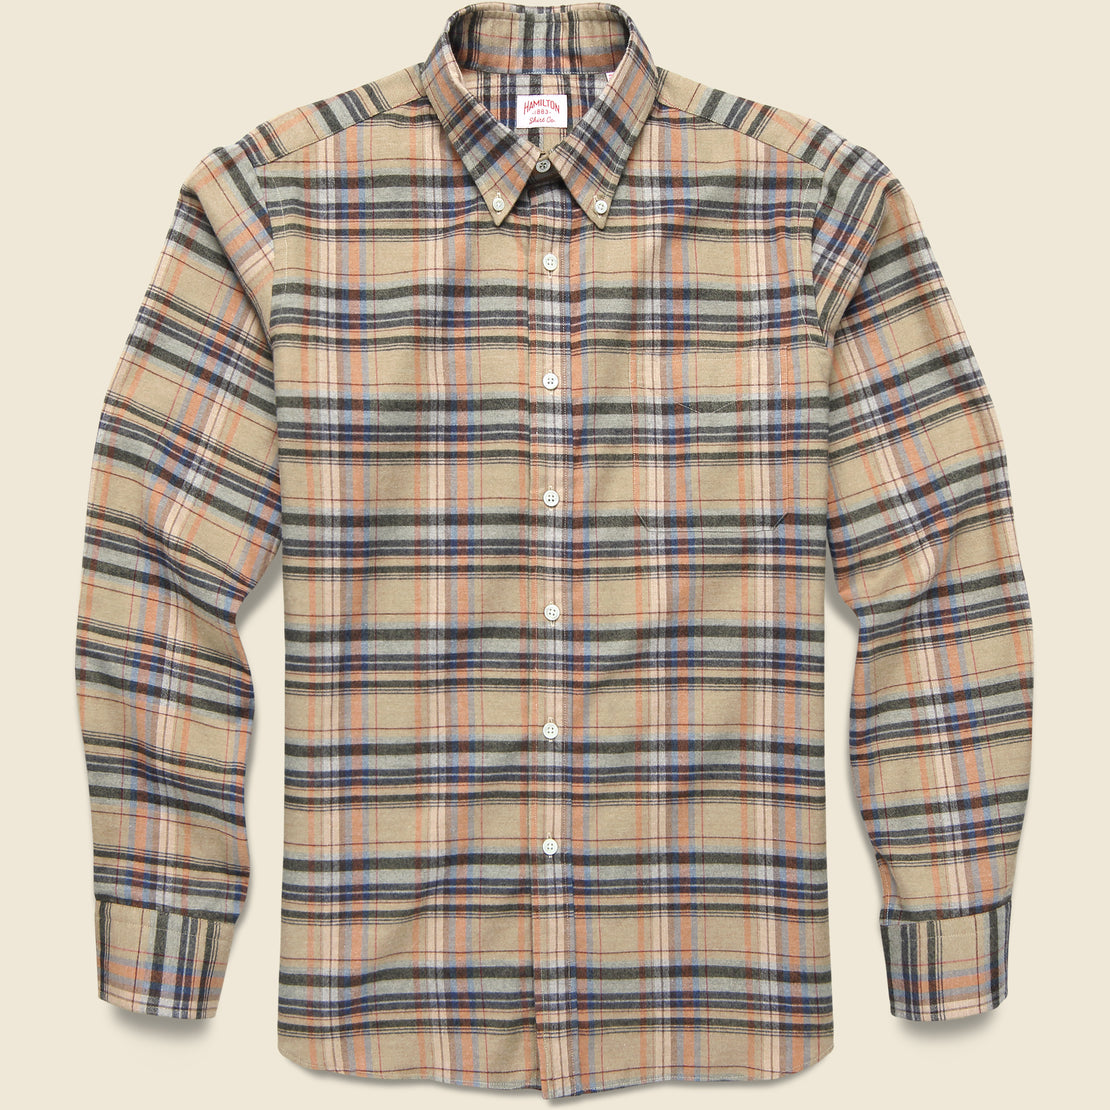 Hamilton Shirt Co. Check Twill Flannel Shirt -  Tan/Grey/Blue